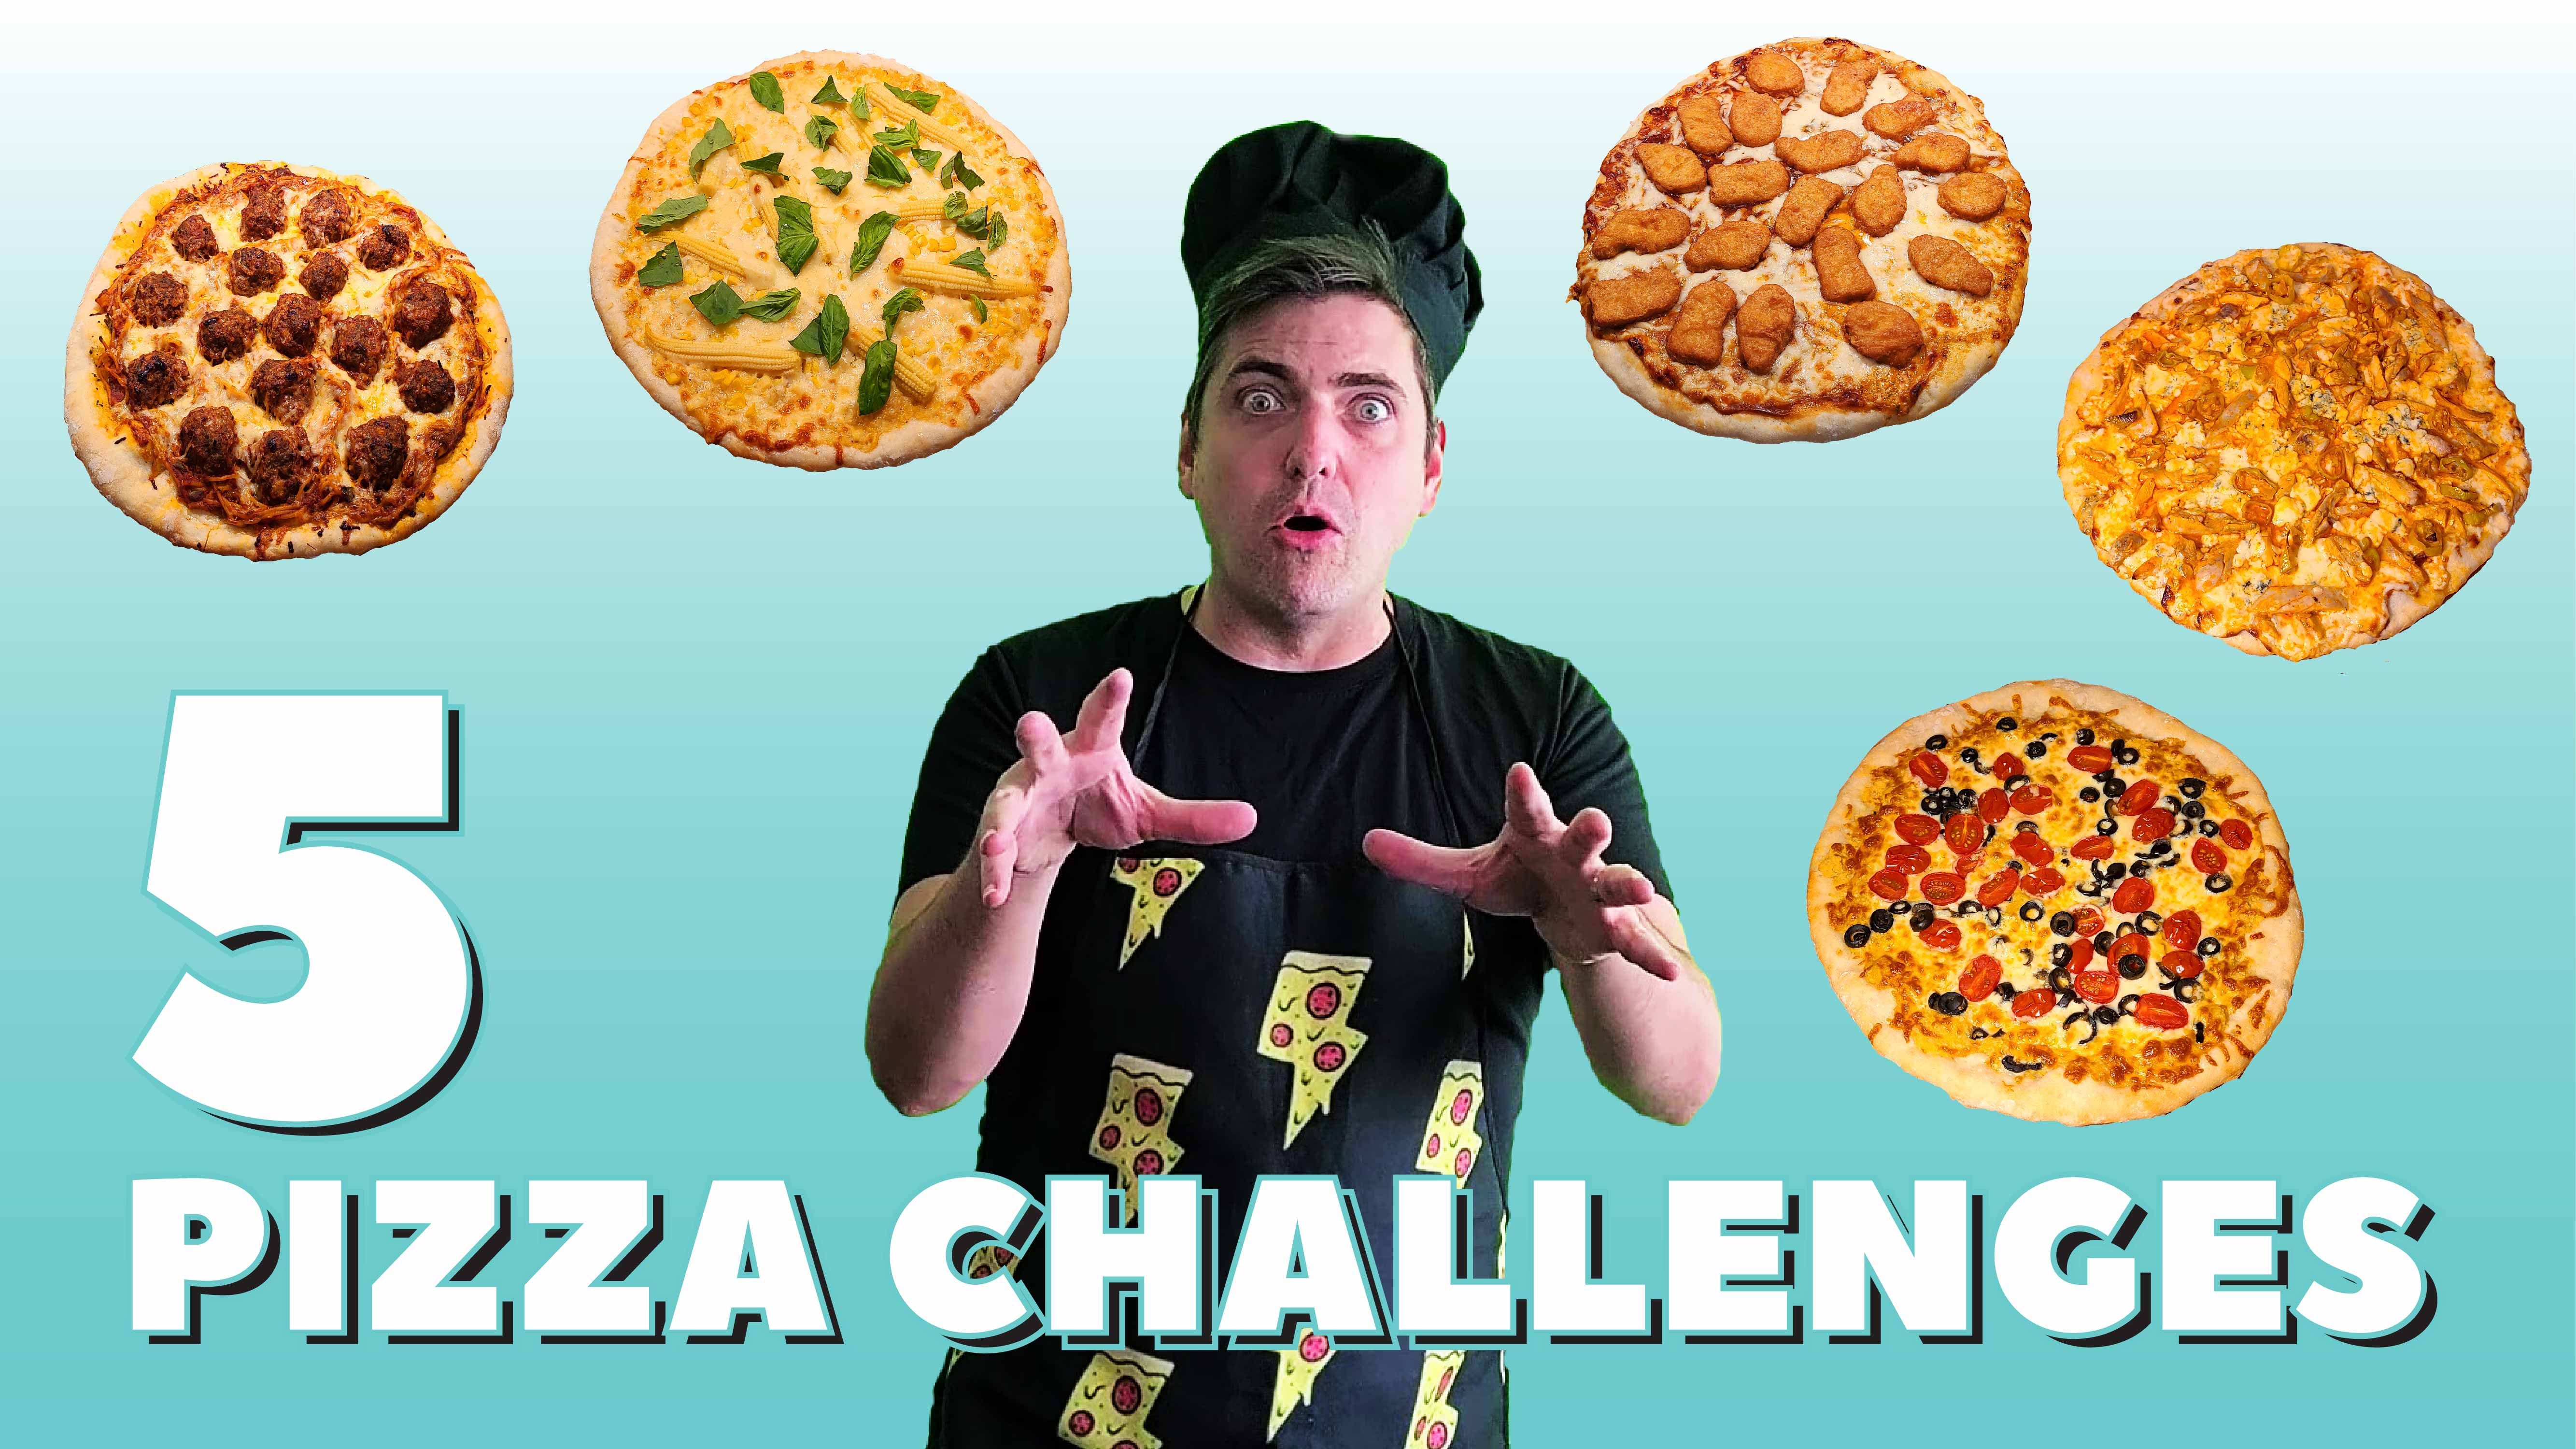 5 Pizza challenges